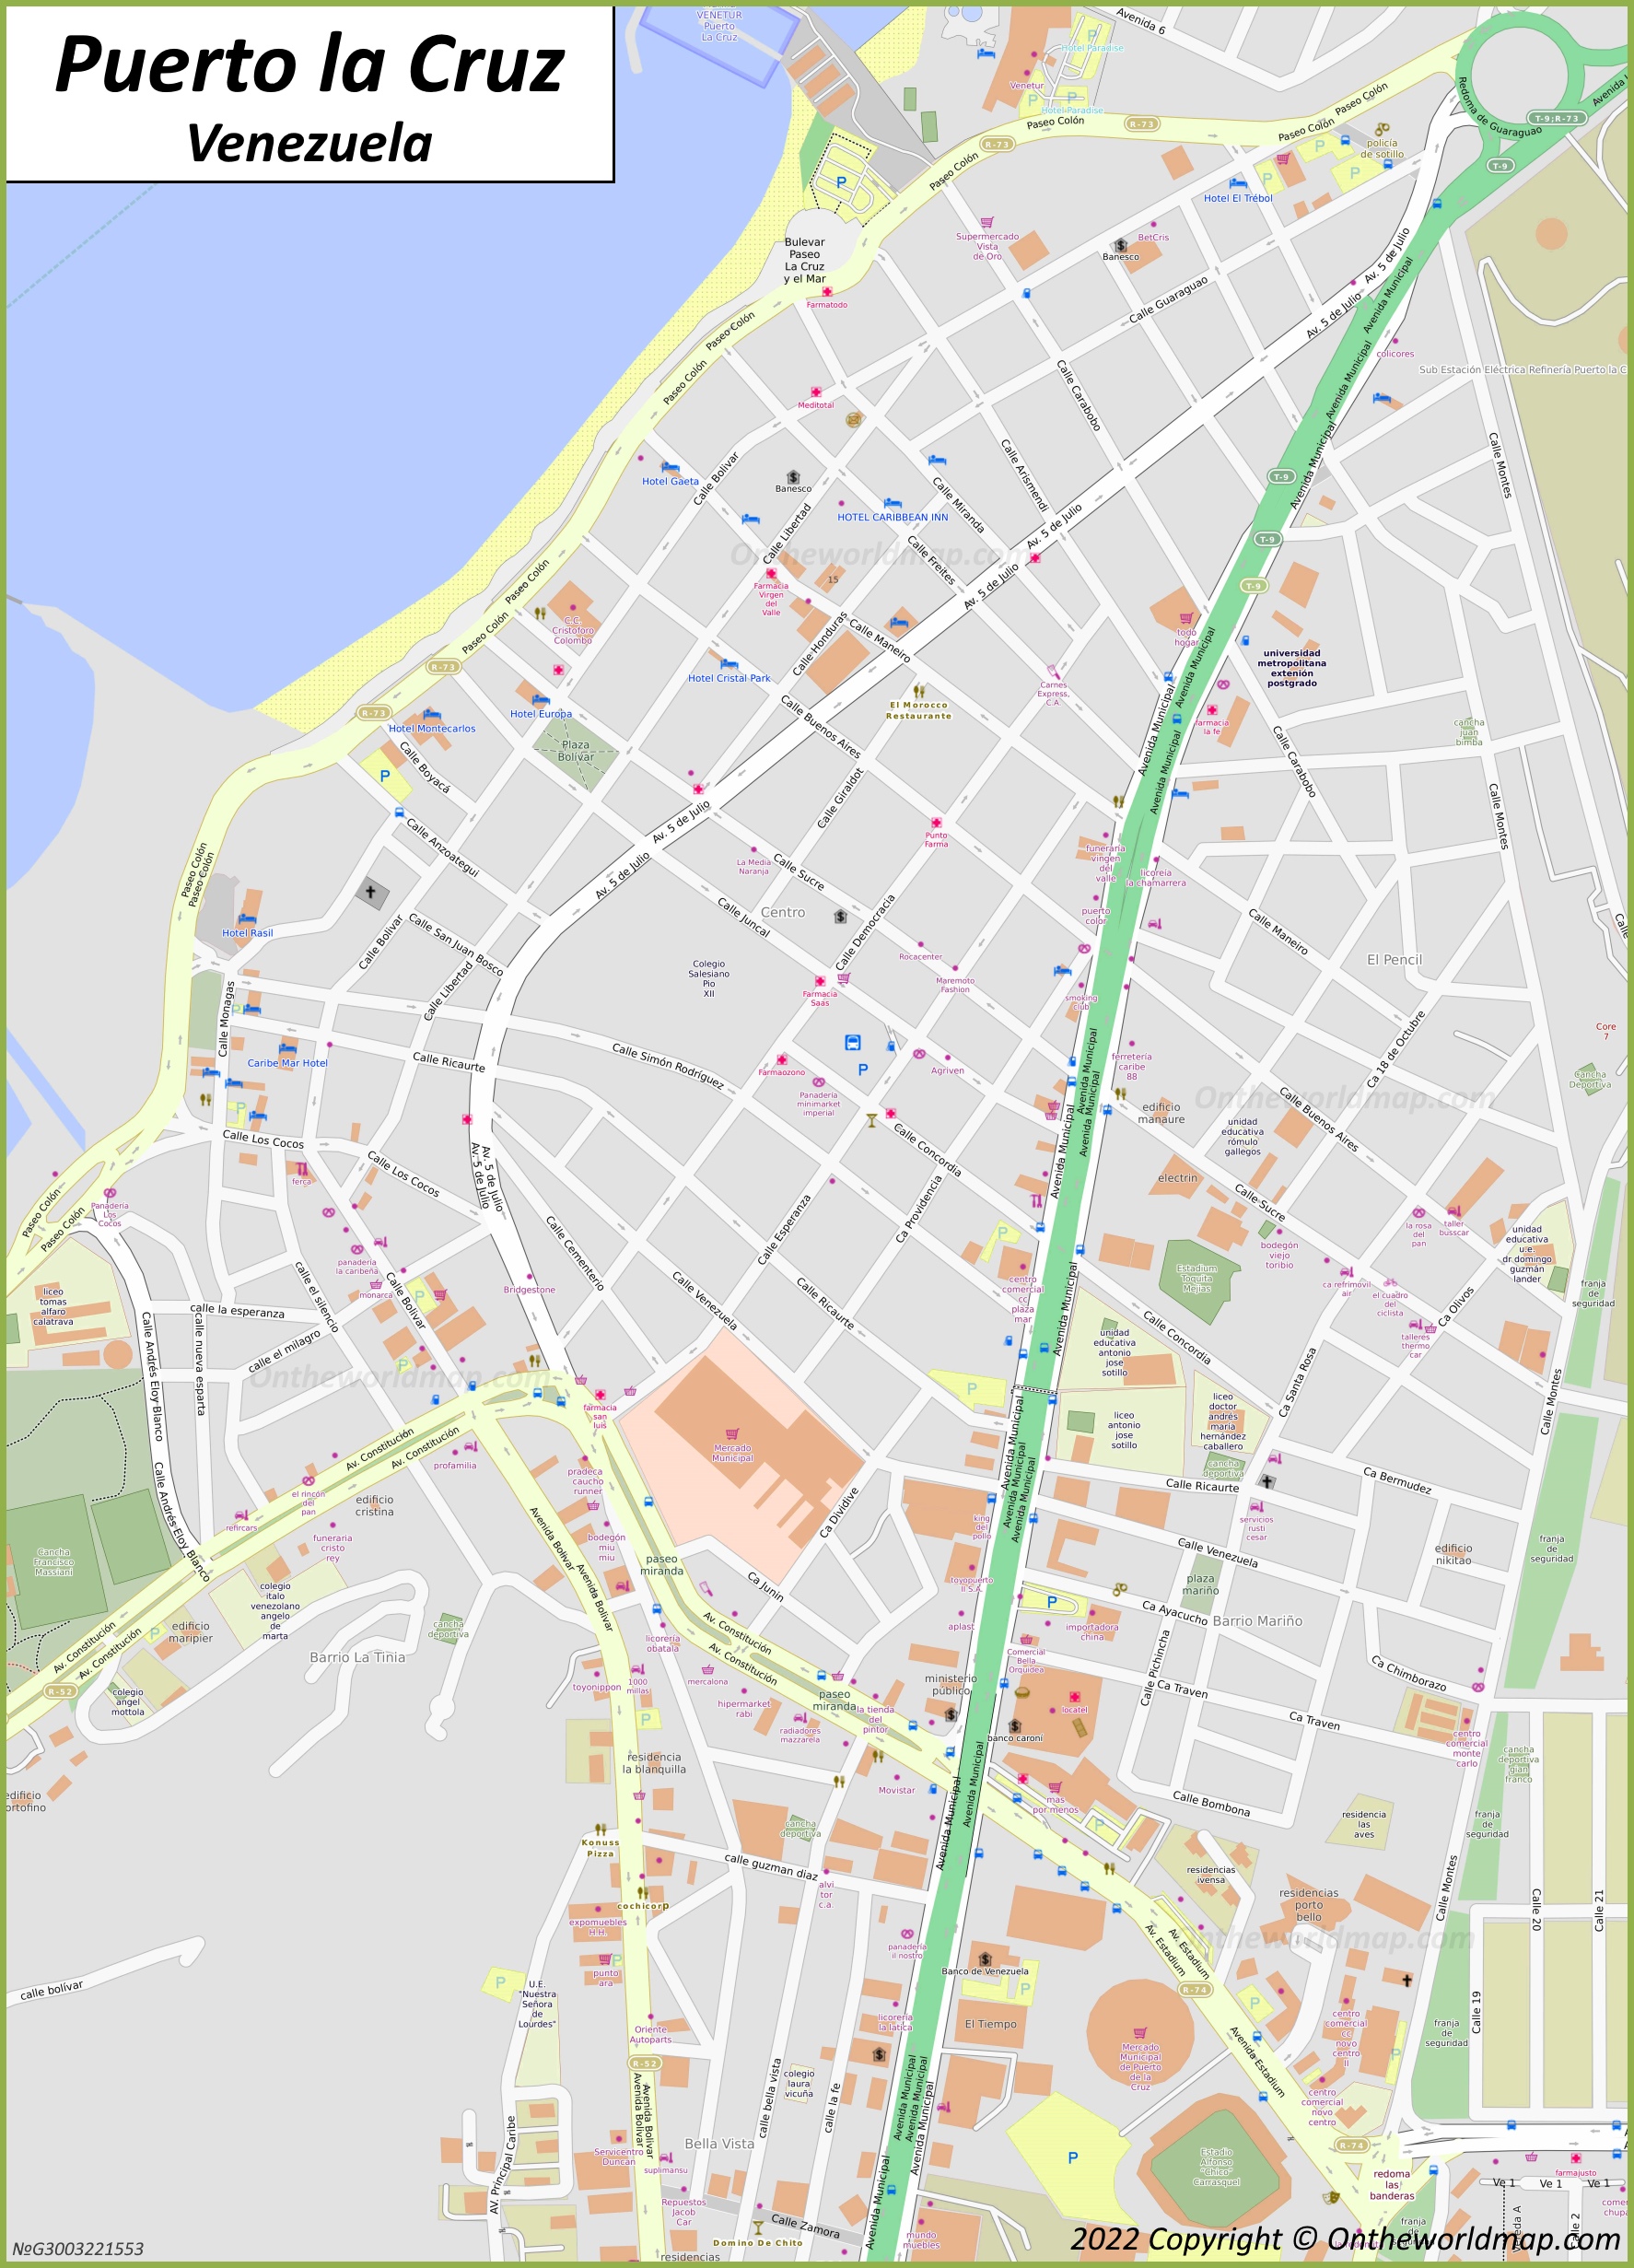 Puerto la Cruz City Centre Map